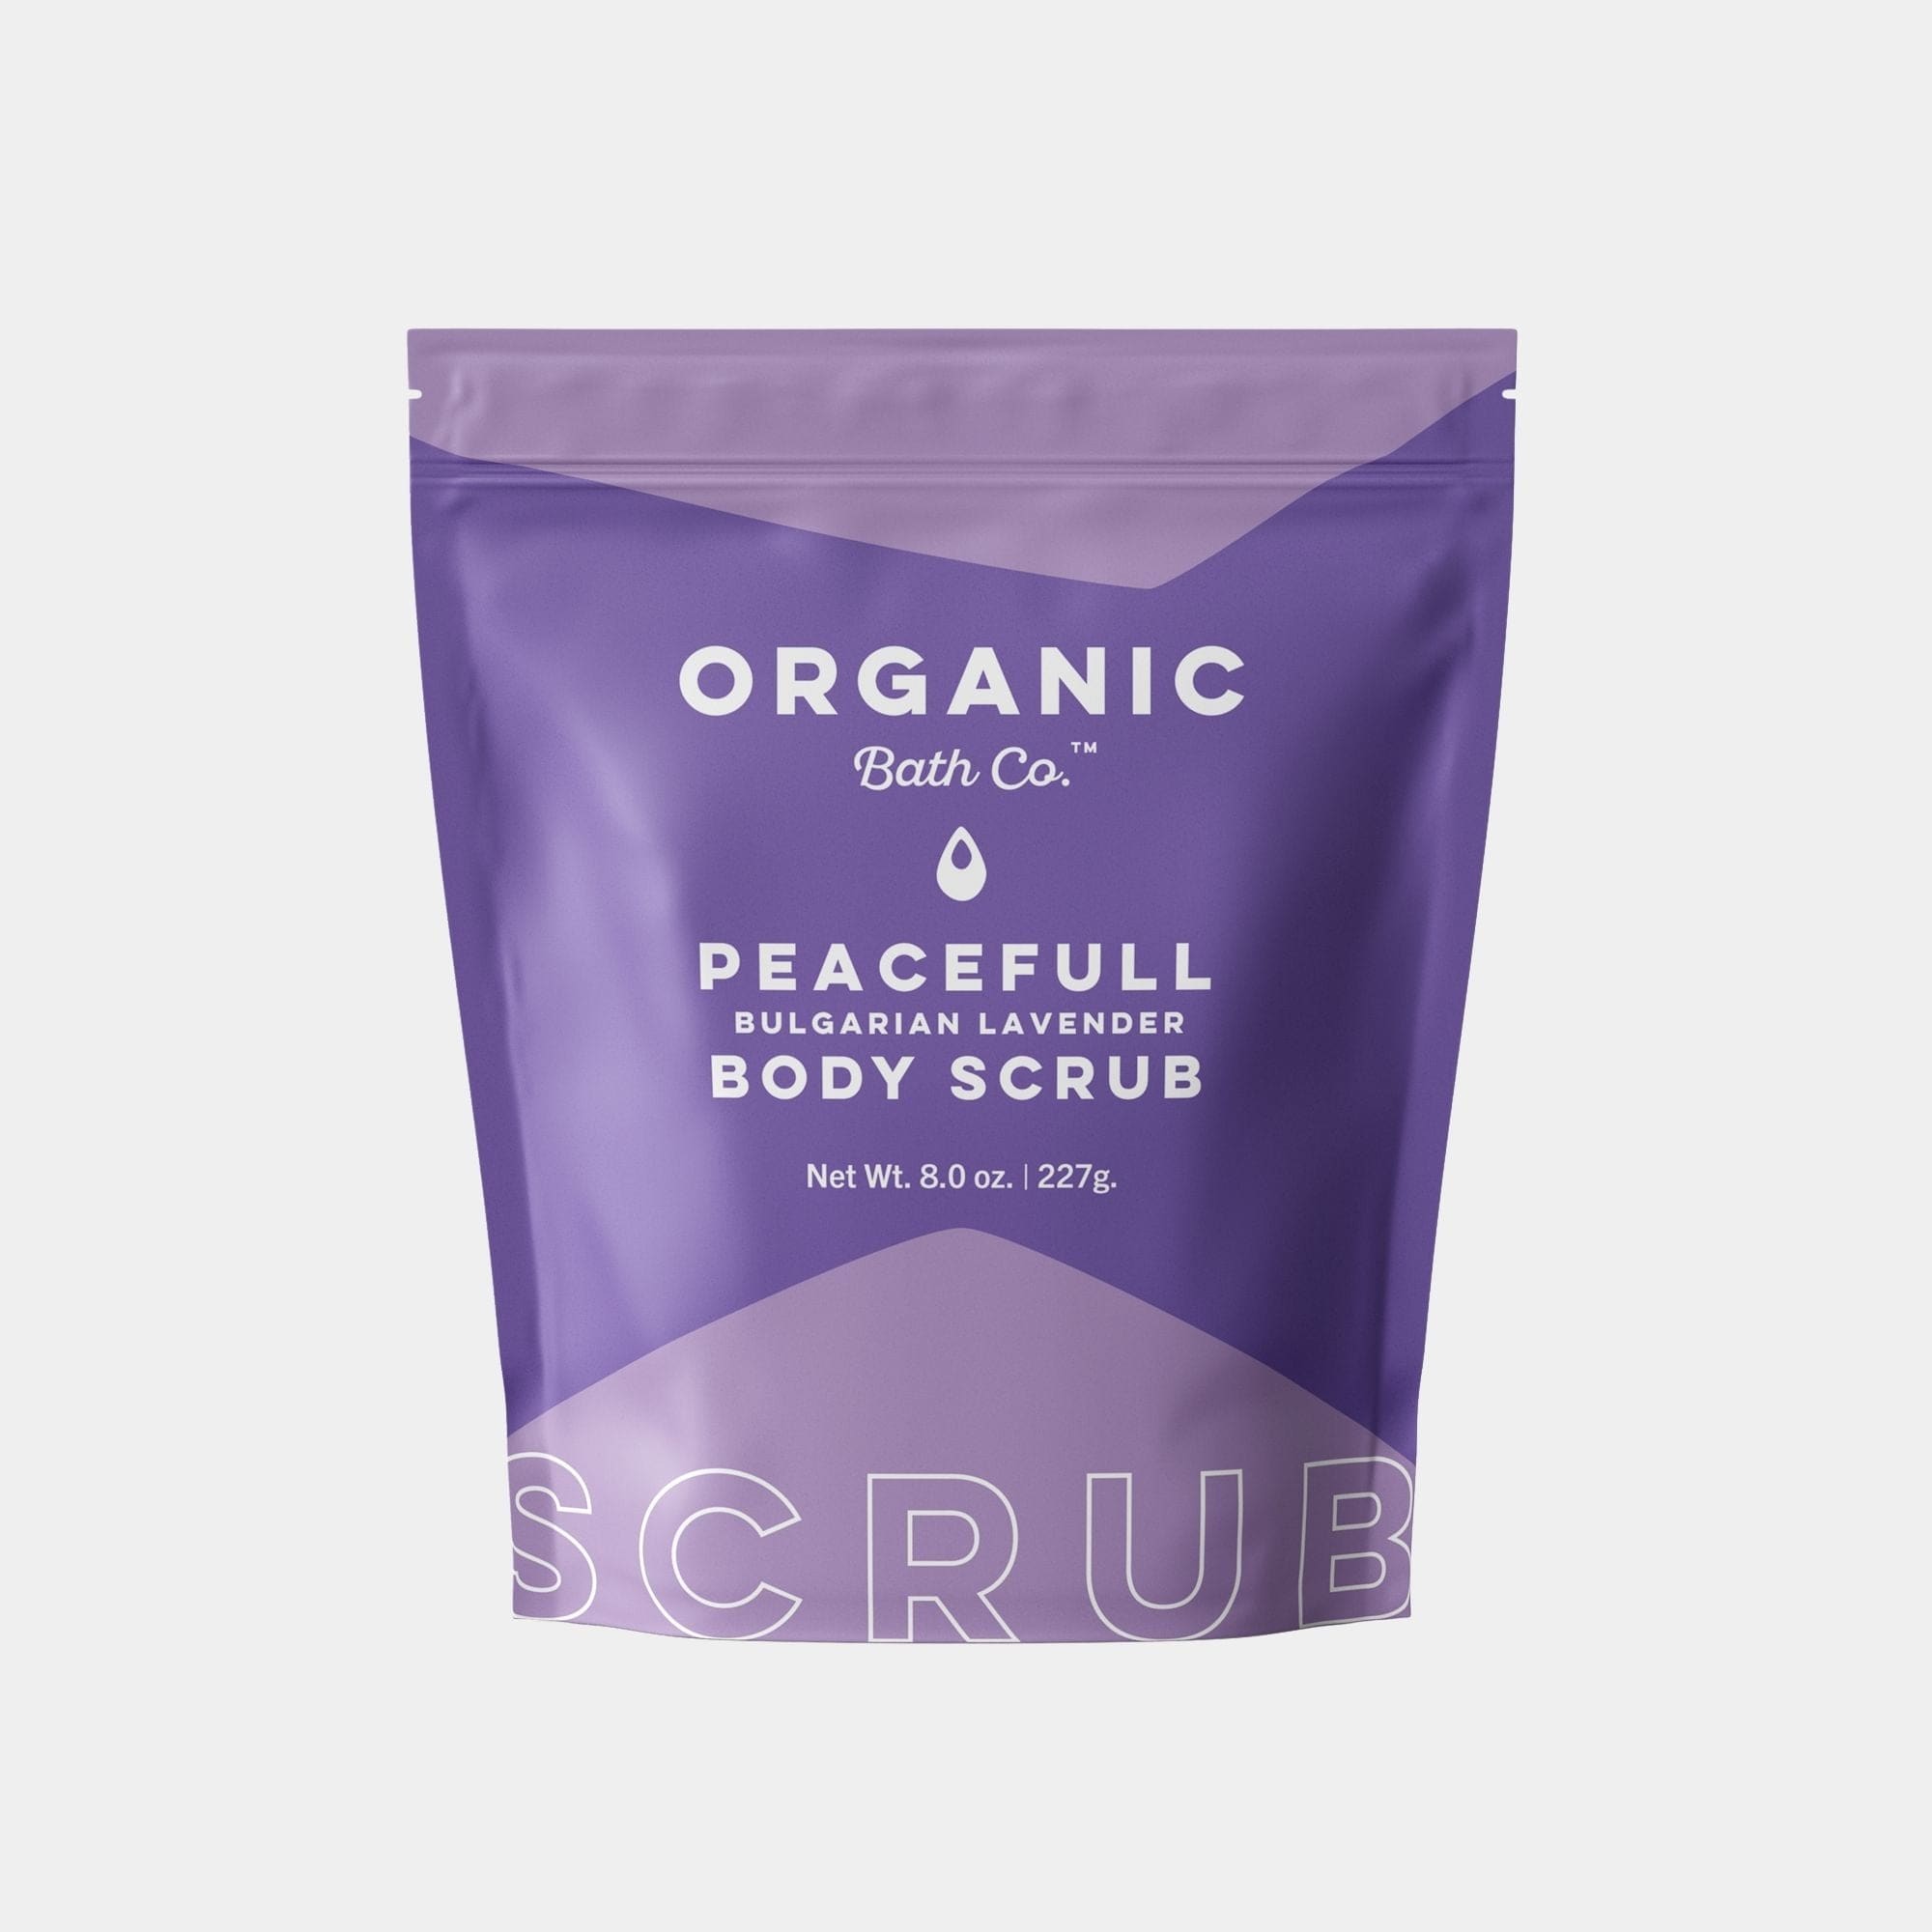 PeaceFull Organic Body Scrub - Organic Bath Co.